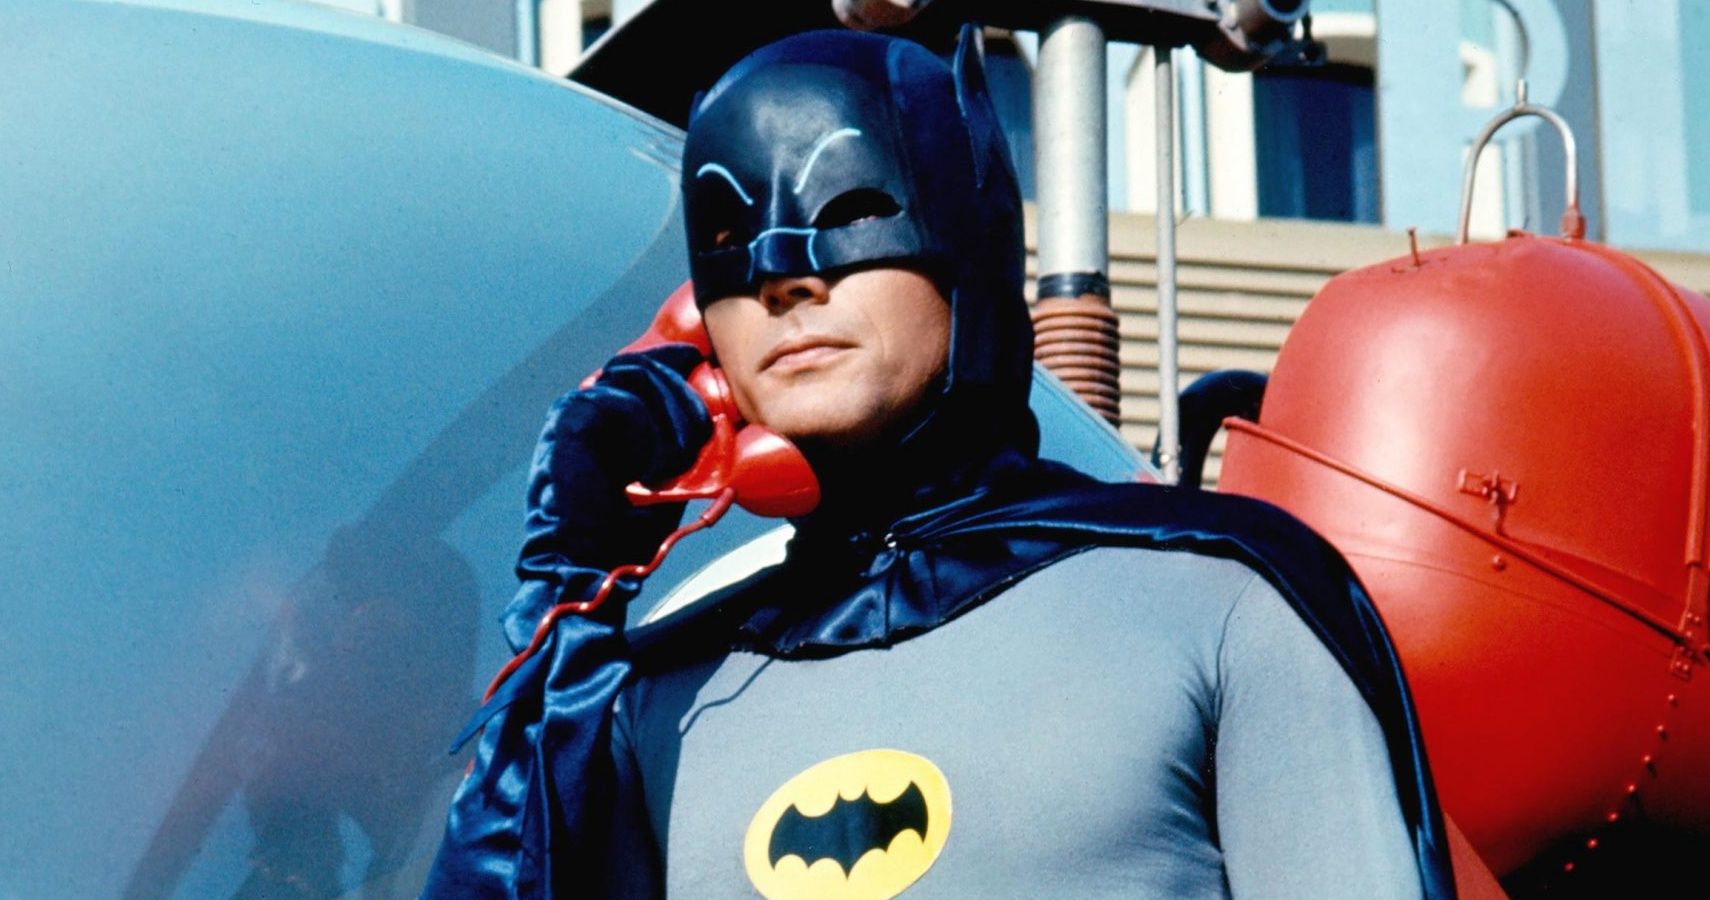 10 Best Episodes Of Adam Wests Batman According To Imdb